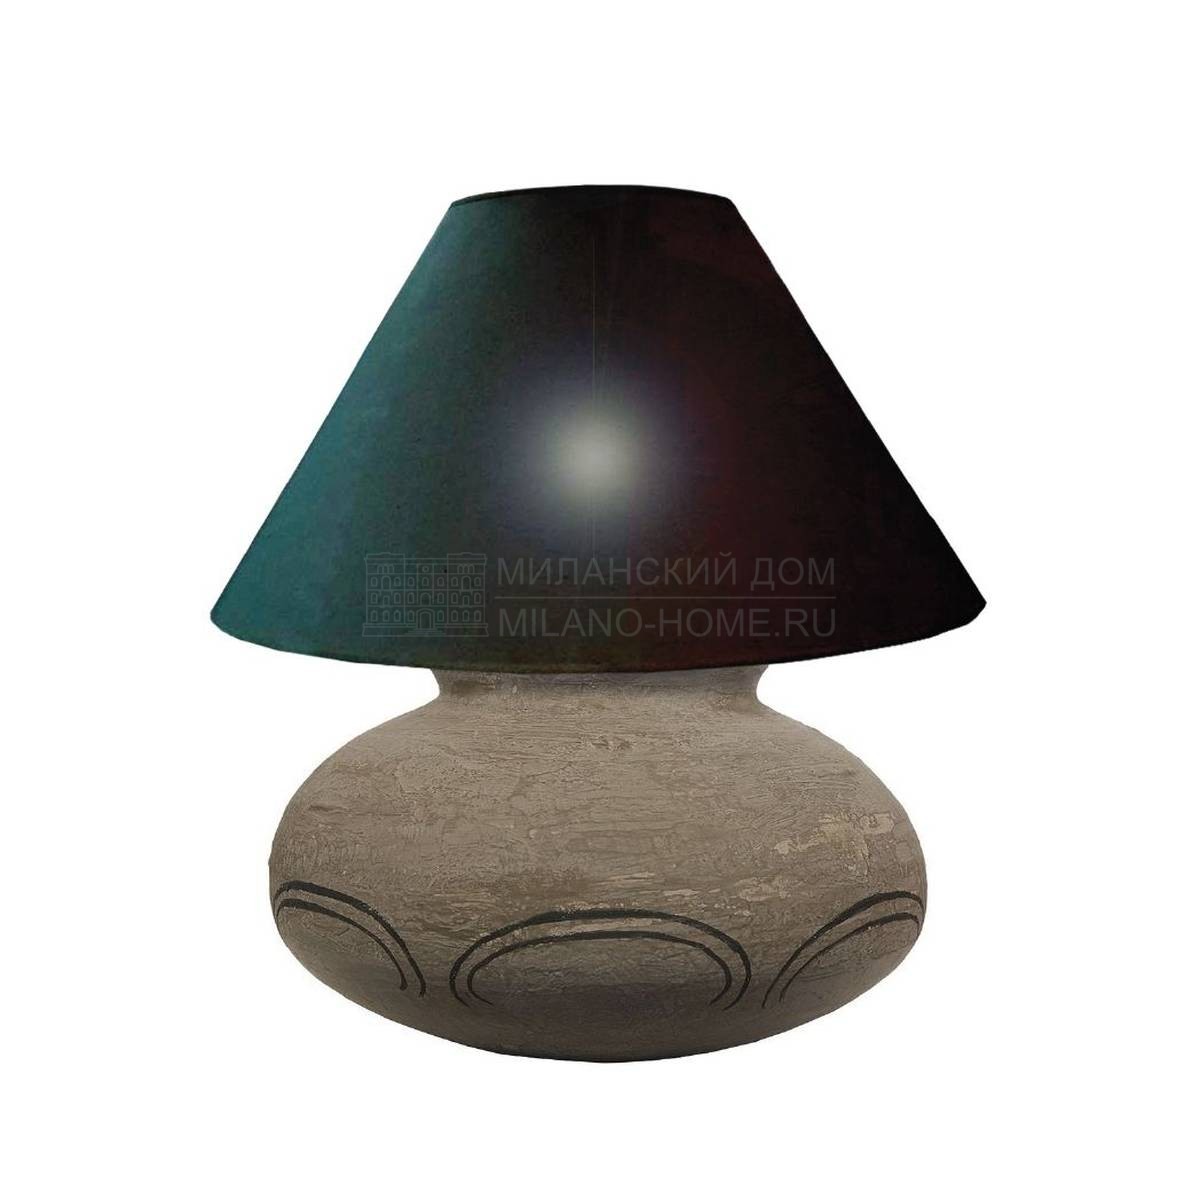 Настольная лампа R320 table lamp из Испании фабрики GUADARTE